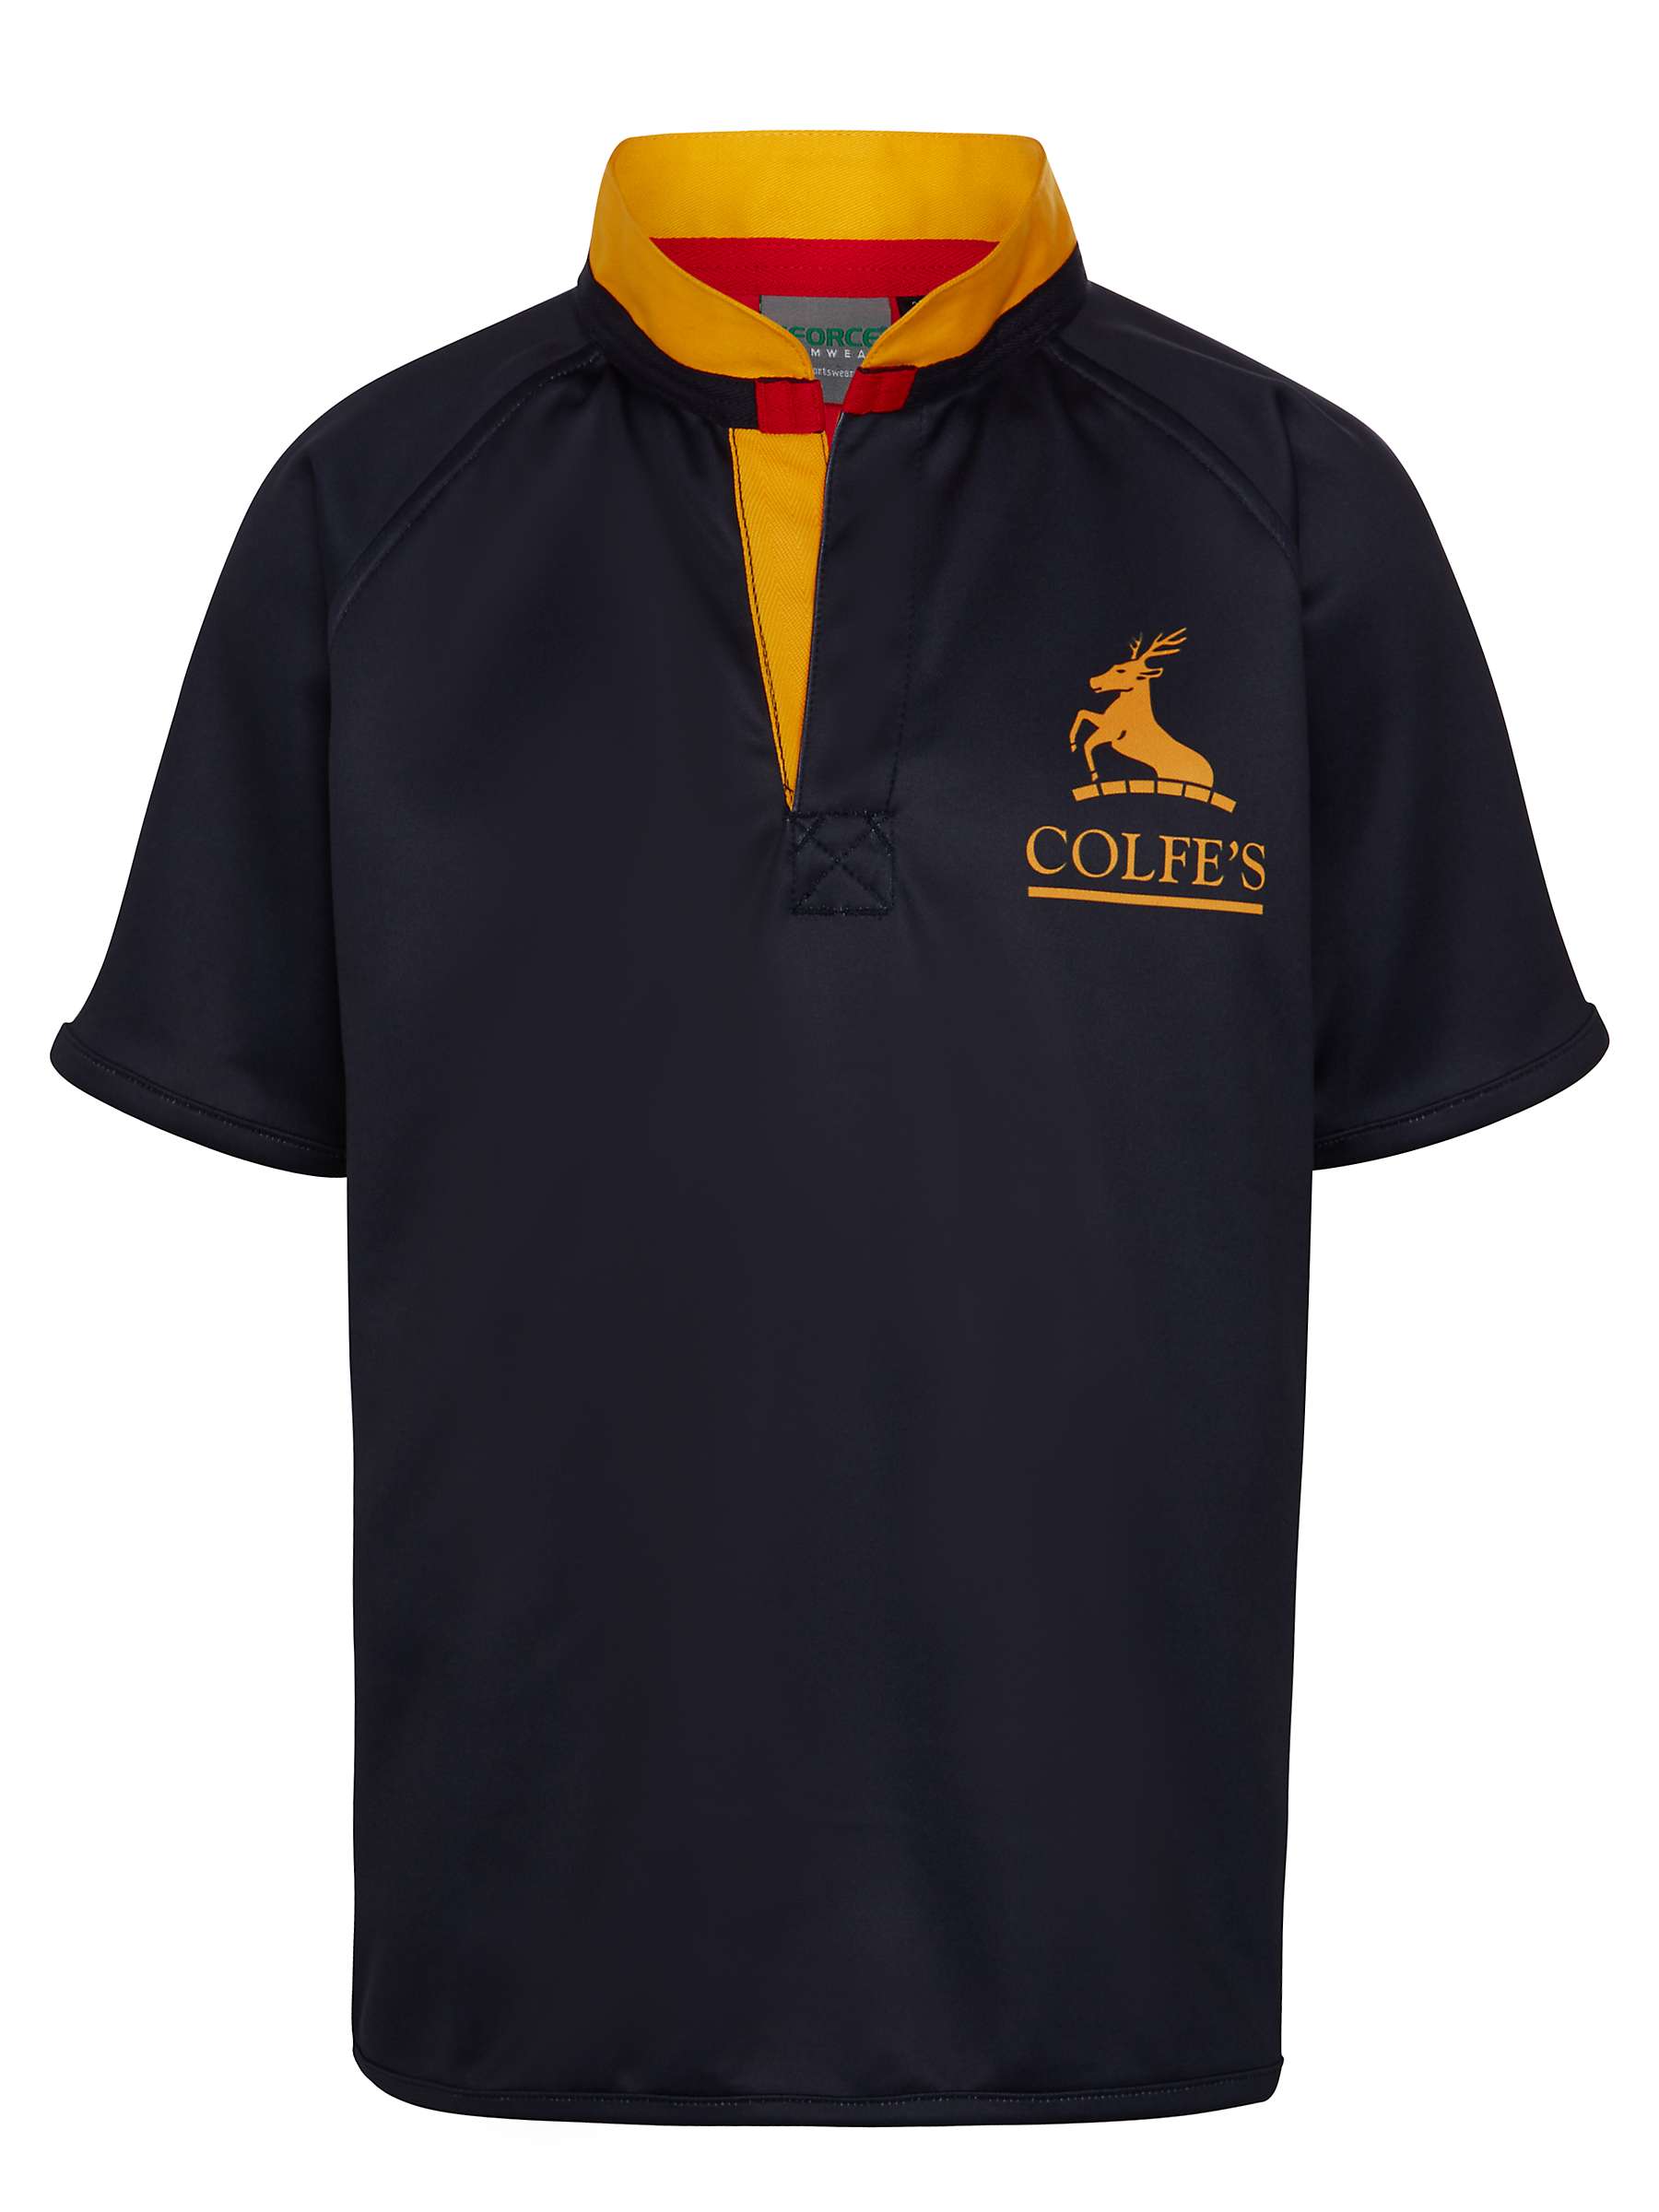 Buy Colfe's School Games Short Sleeved Prendergast House Jersey, Navy Online at johnlewis.com